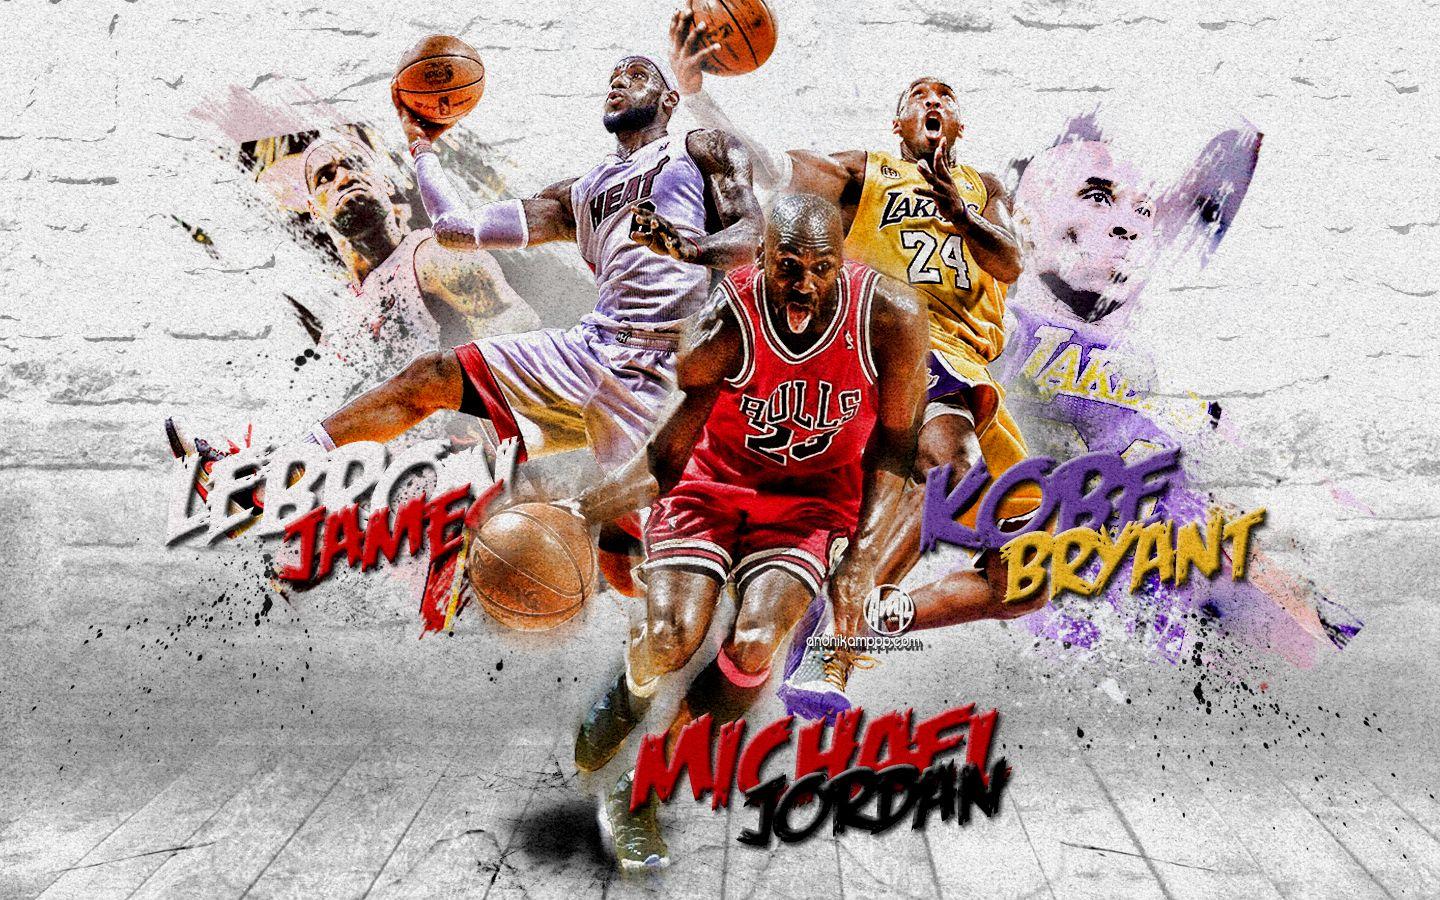 NBA Legends Wallpaper. Nba legends, Lebron james wallpaper, Sports wallpaper